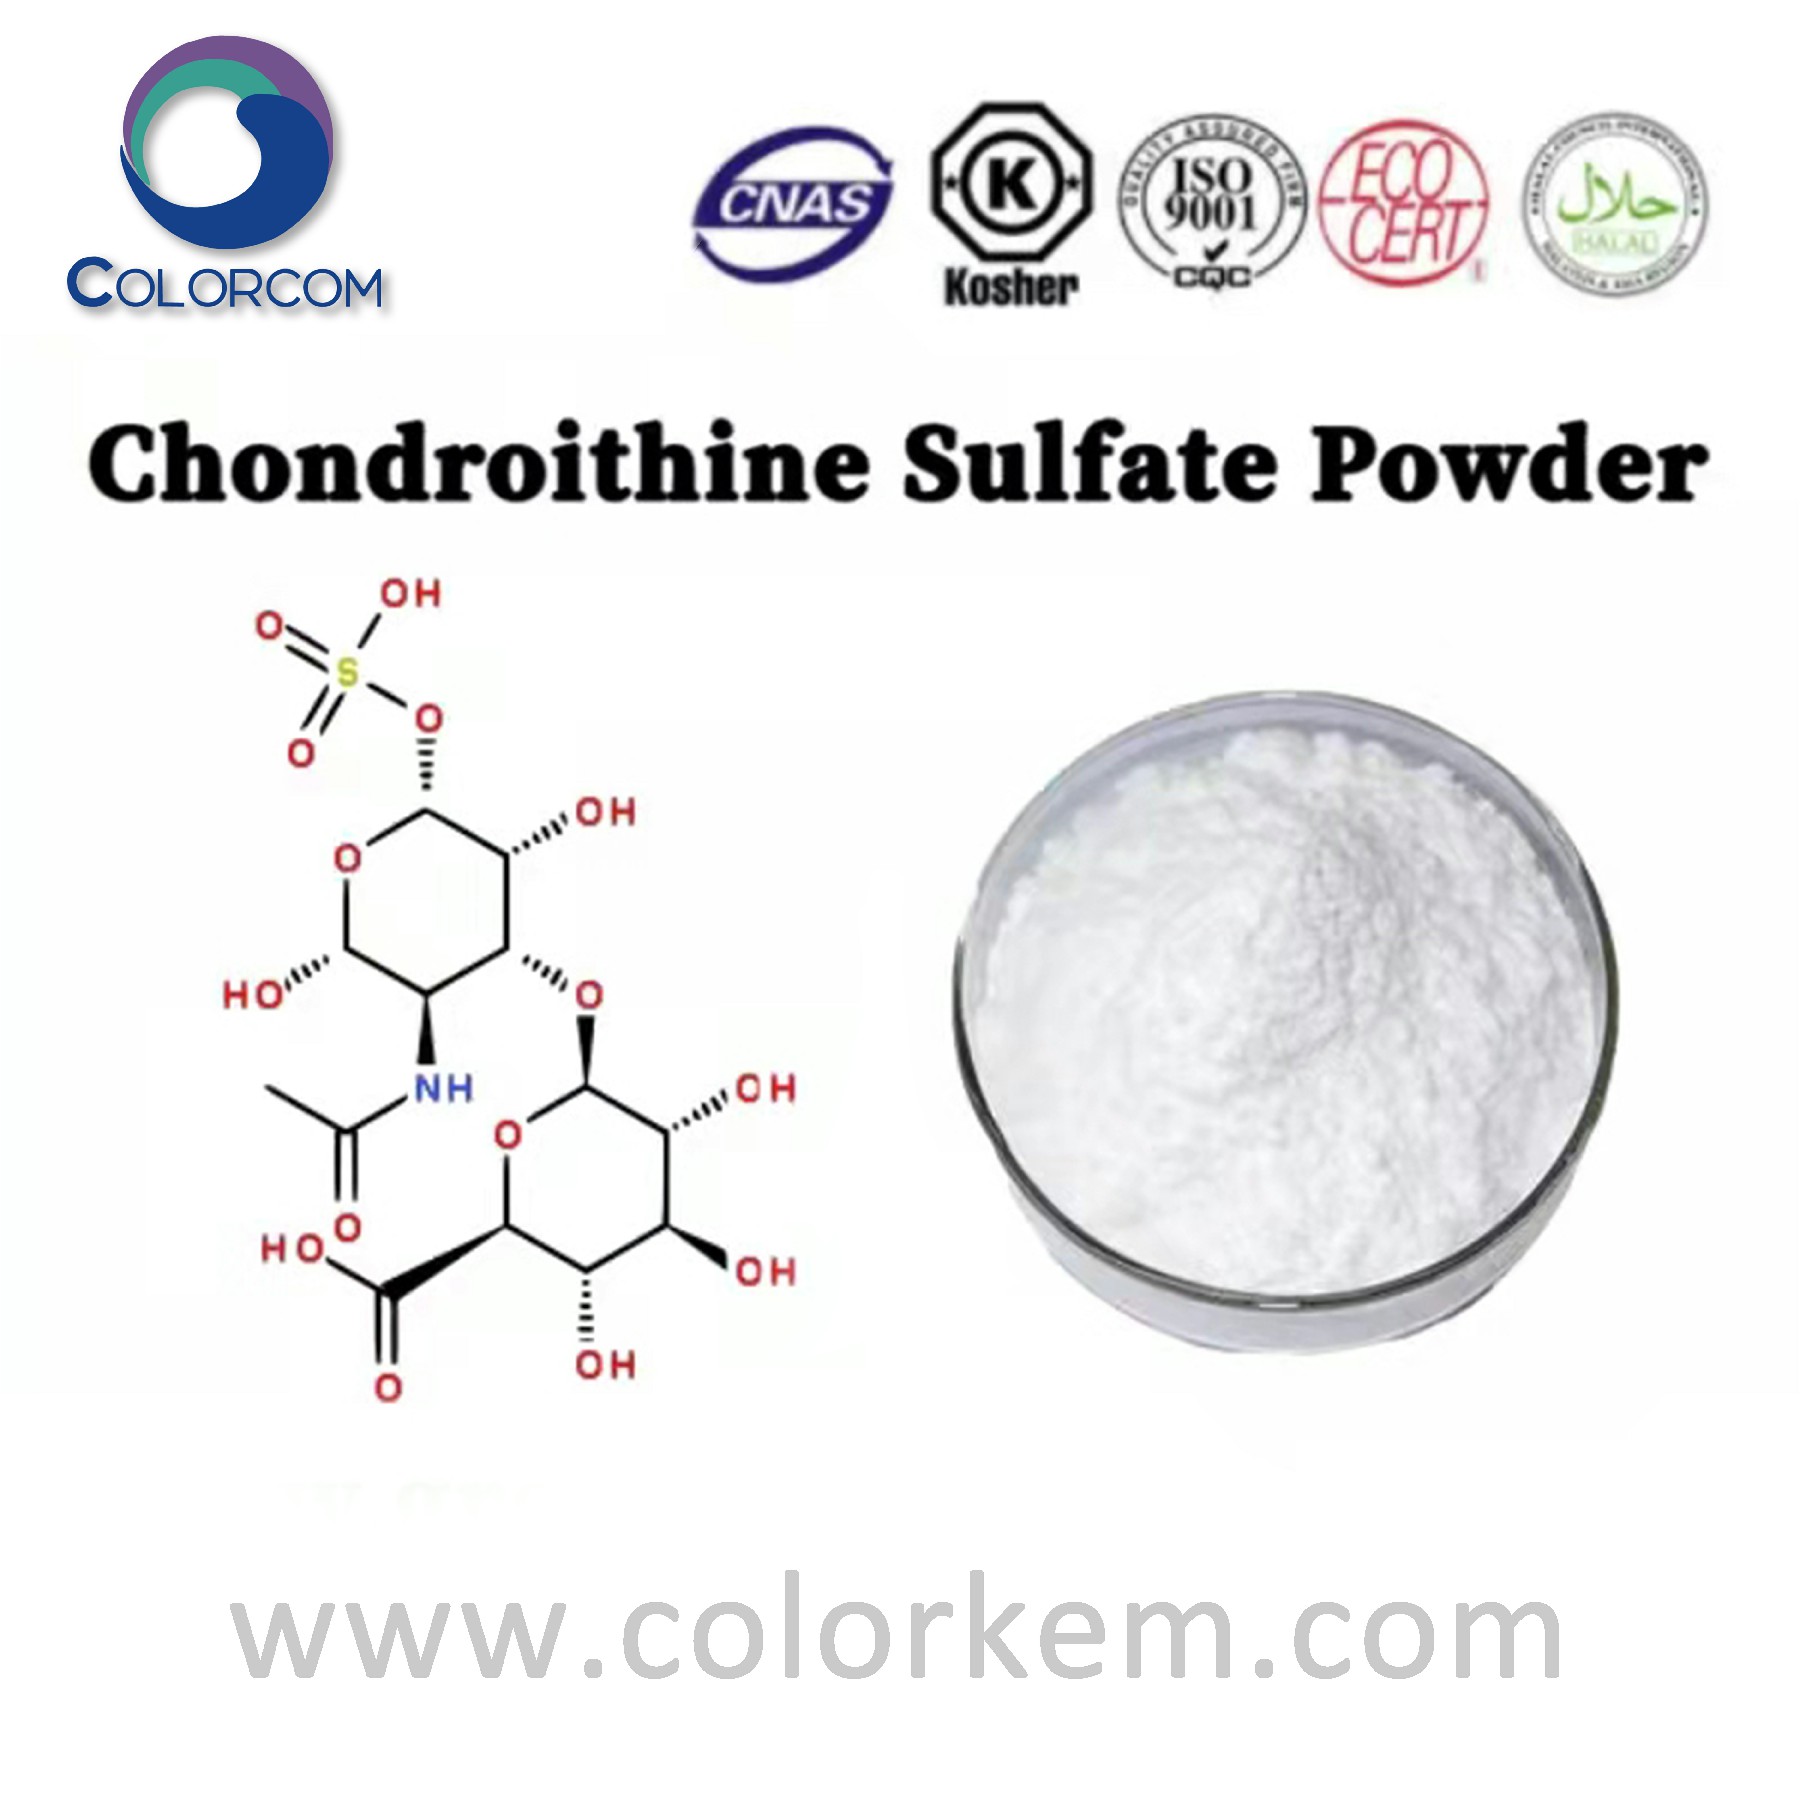 Chondroithine sulfate powder